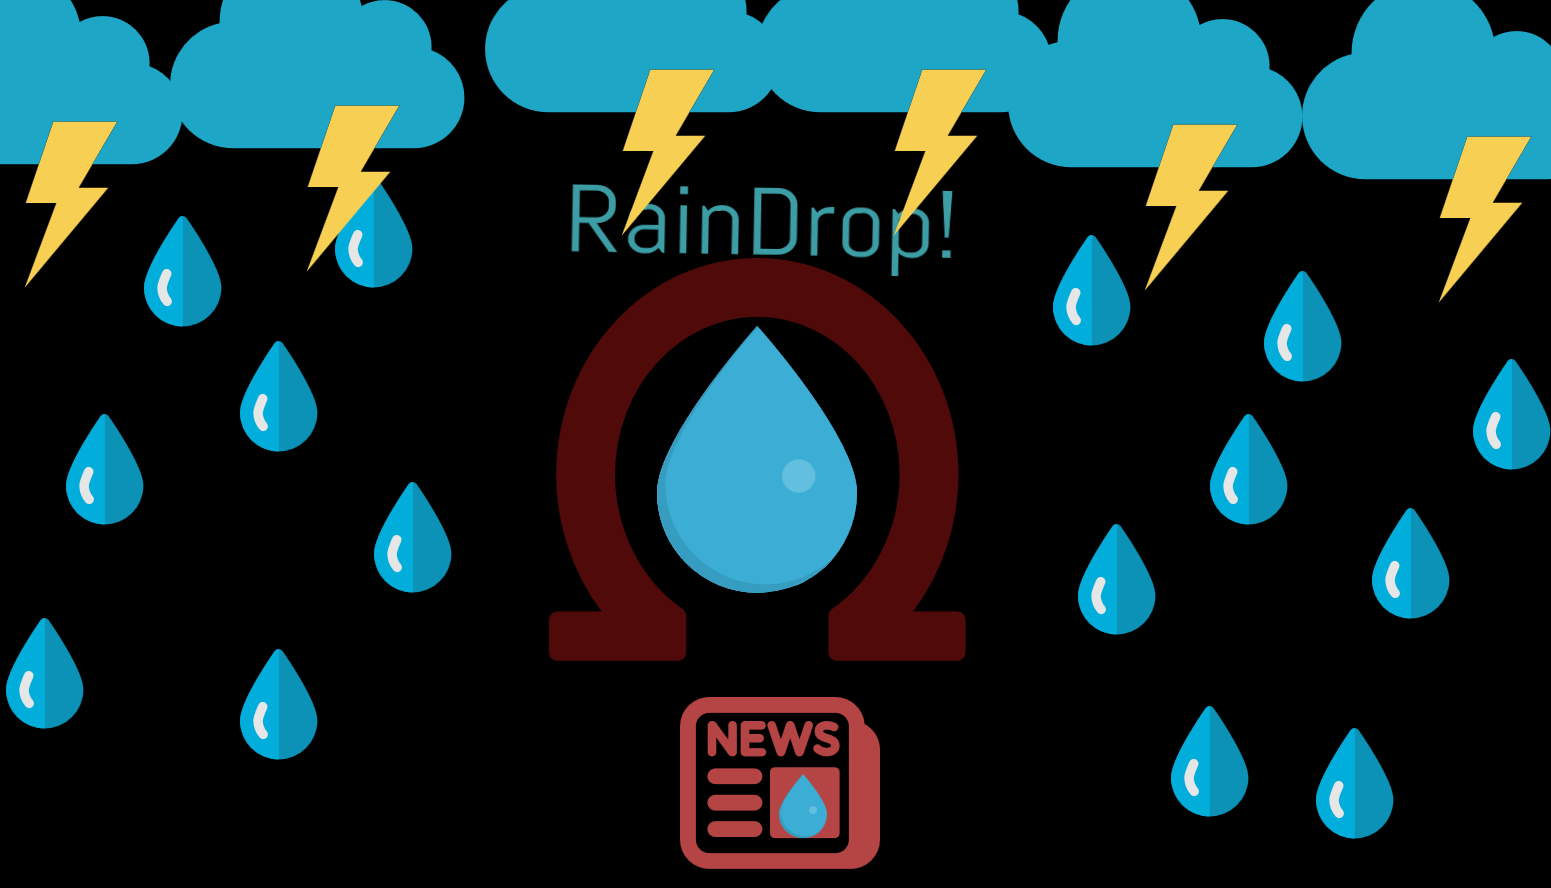 Unofficial Raindrop News Limited Lua Env Level 7 2 5 17 - intriga roblox level 7 exploit download 2017 videos